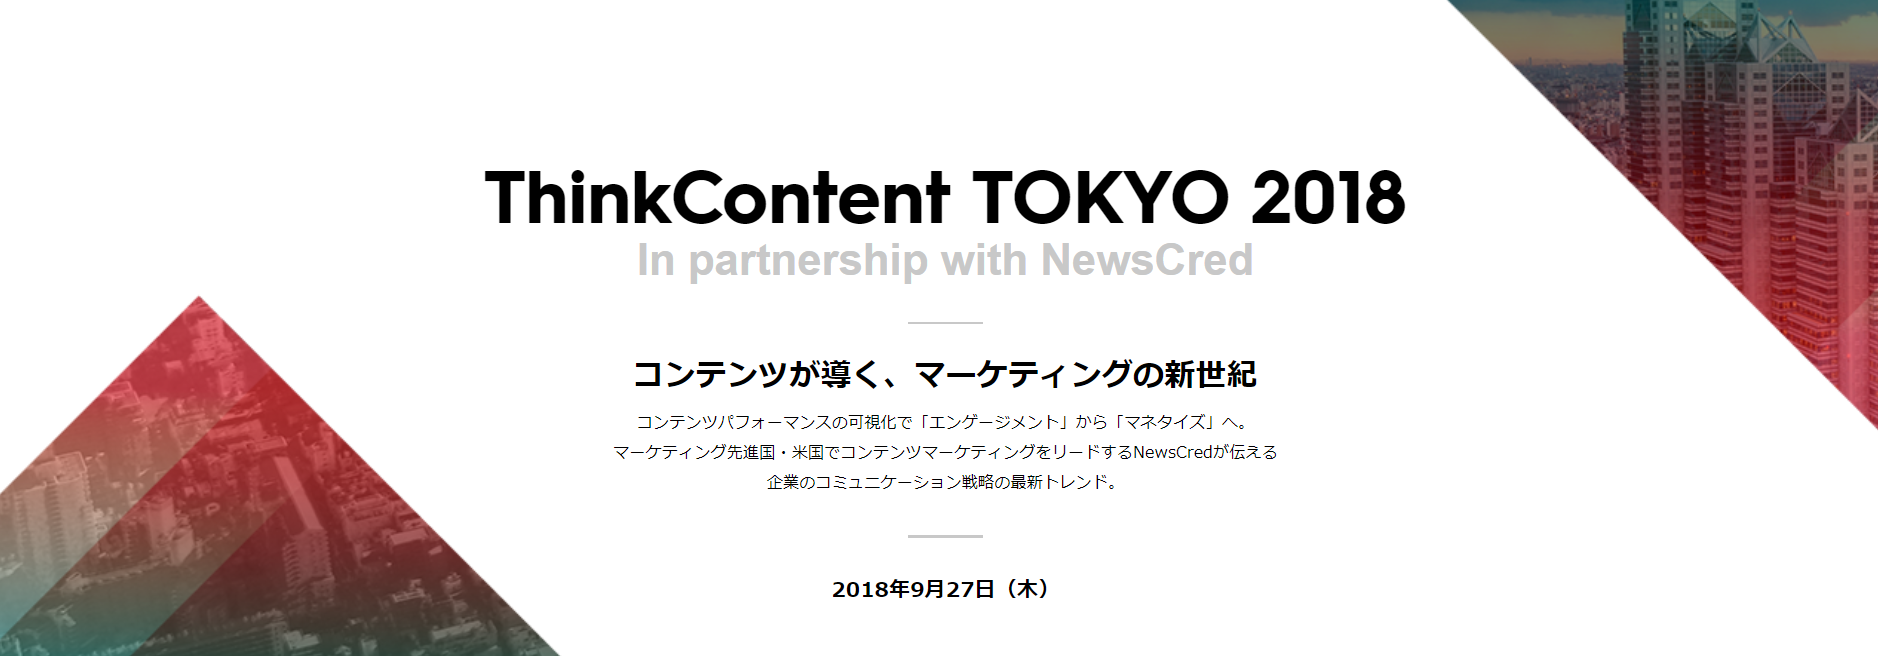 【Event】ThinkContent TOKYO 2018に弊社代表 嶋瀬が登壇します！